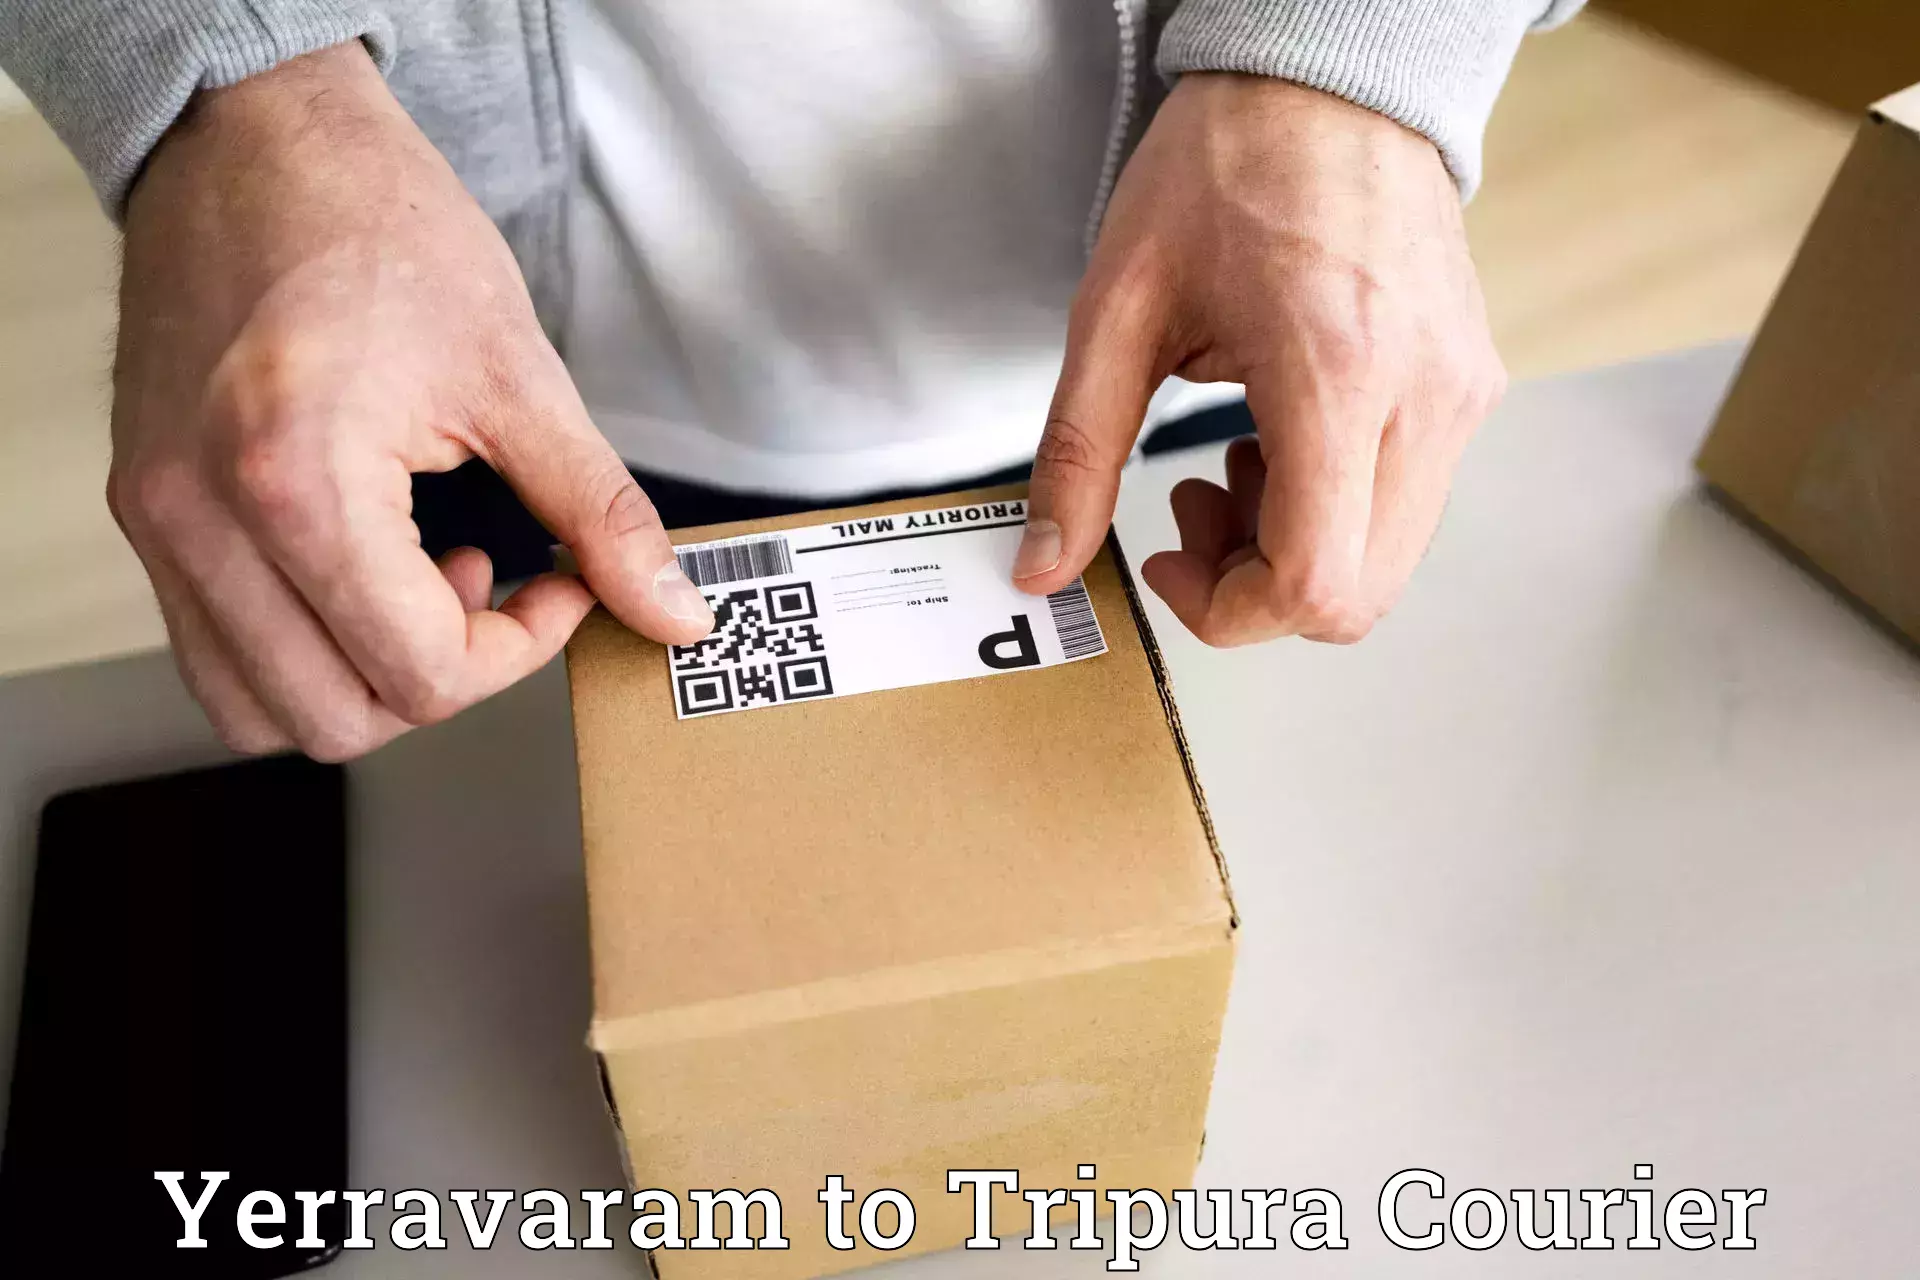 Courier service comparison Yerravaram to Amarpur